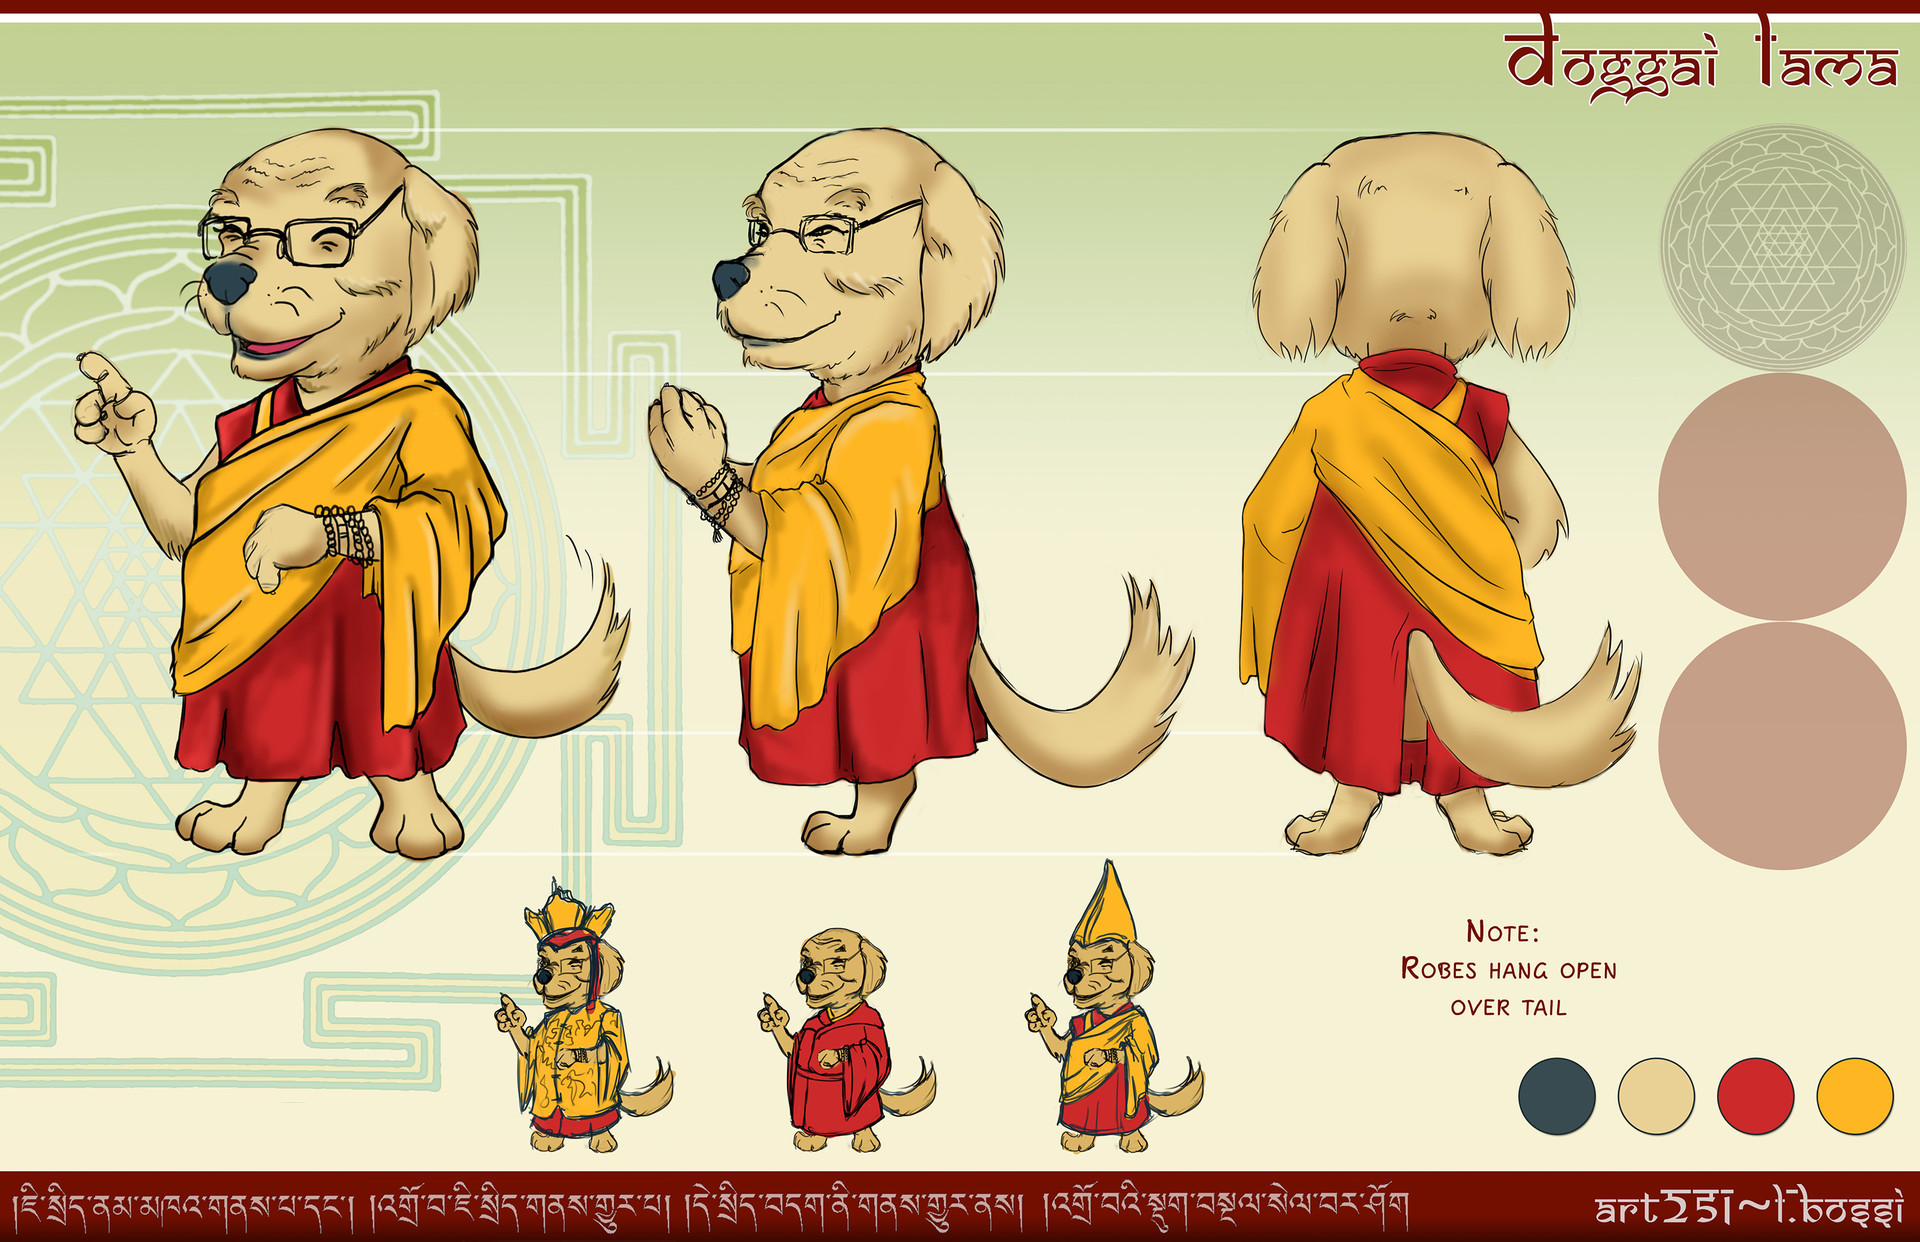 Character Design: Doggai Lama